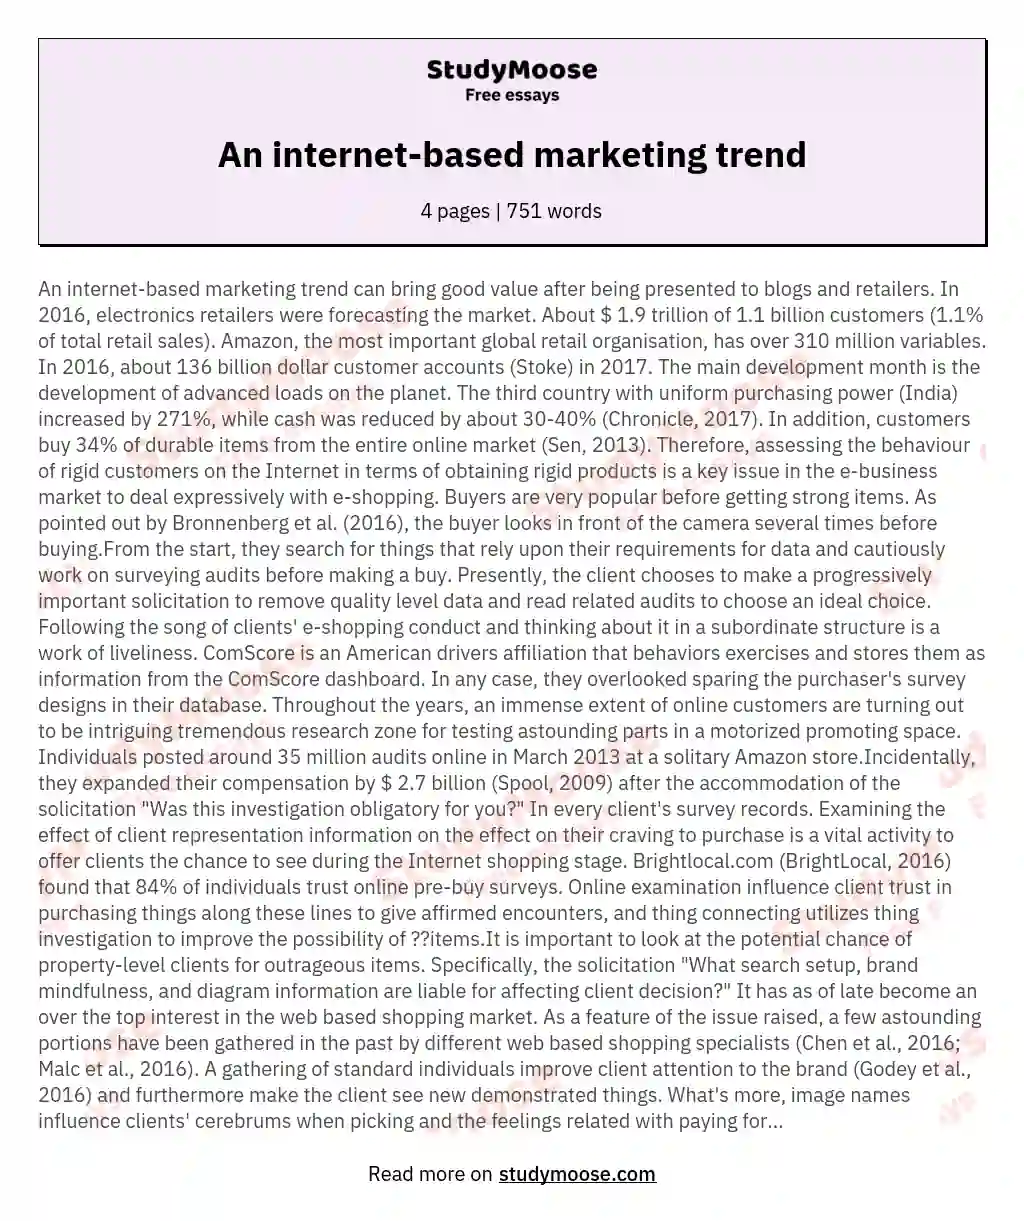 An internet-based marketing trend essay